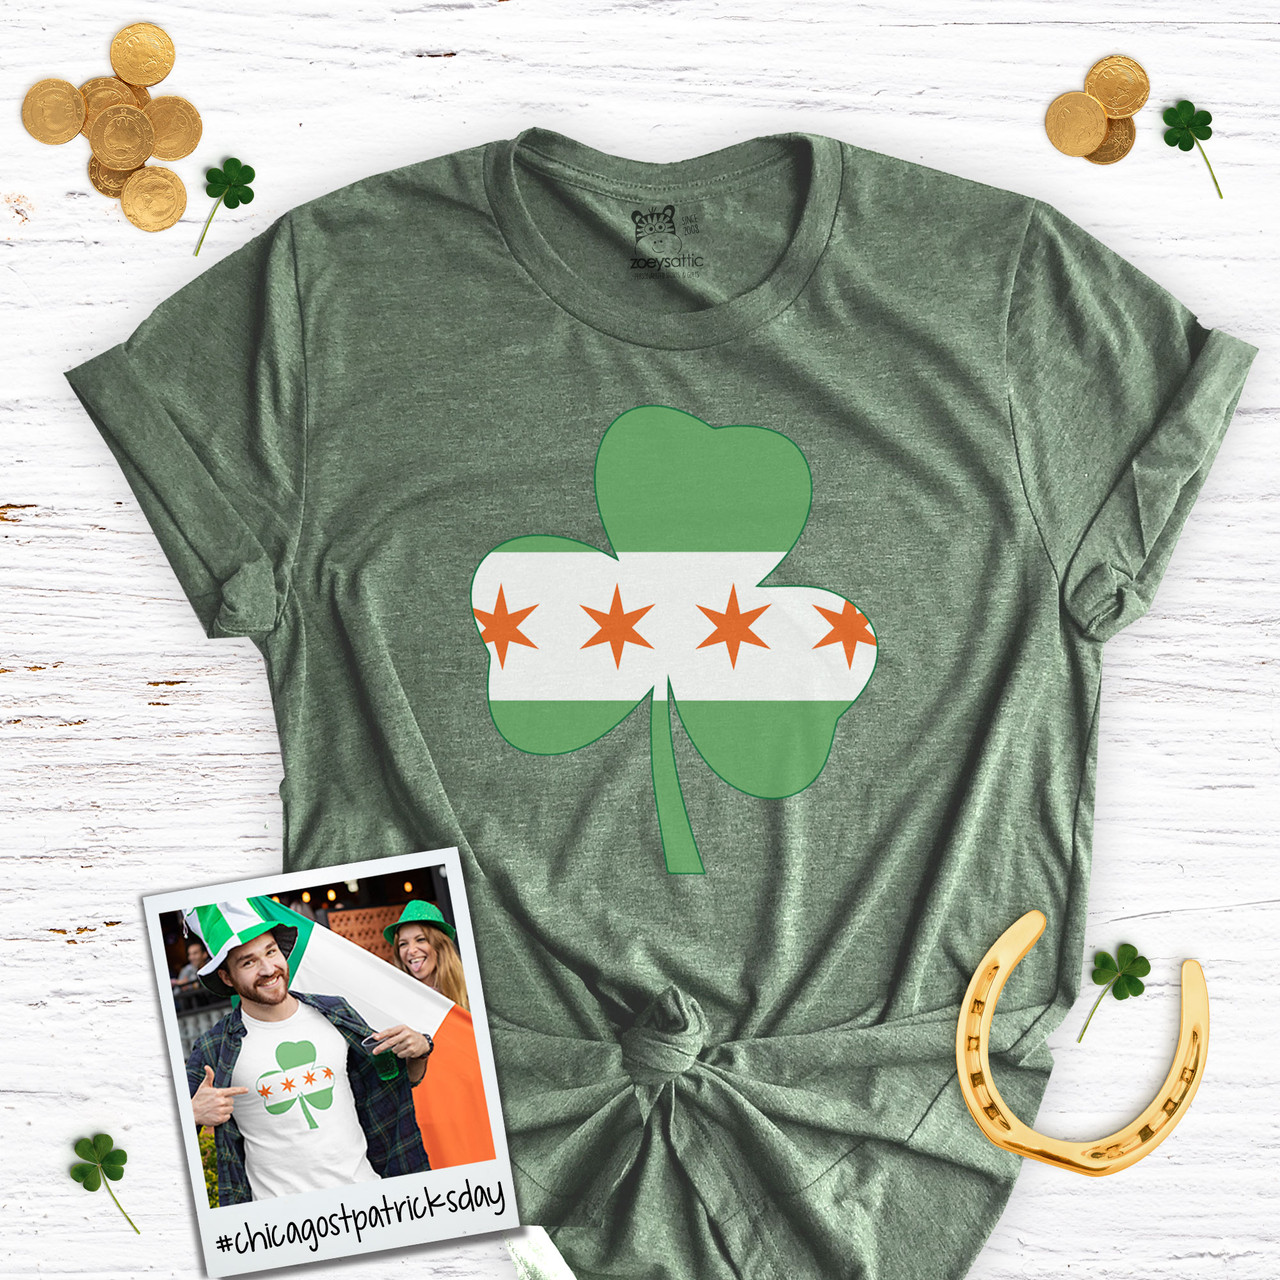  Chicago, St Patrick's day shirt - Patty's day shamrock